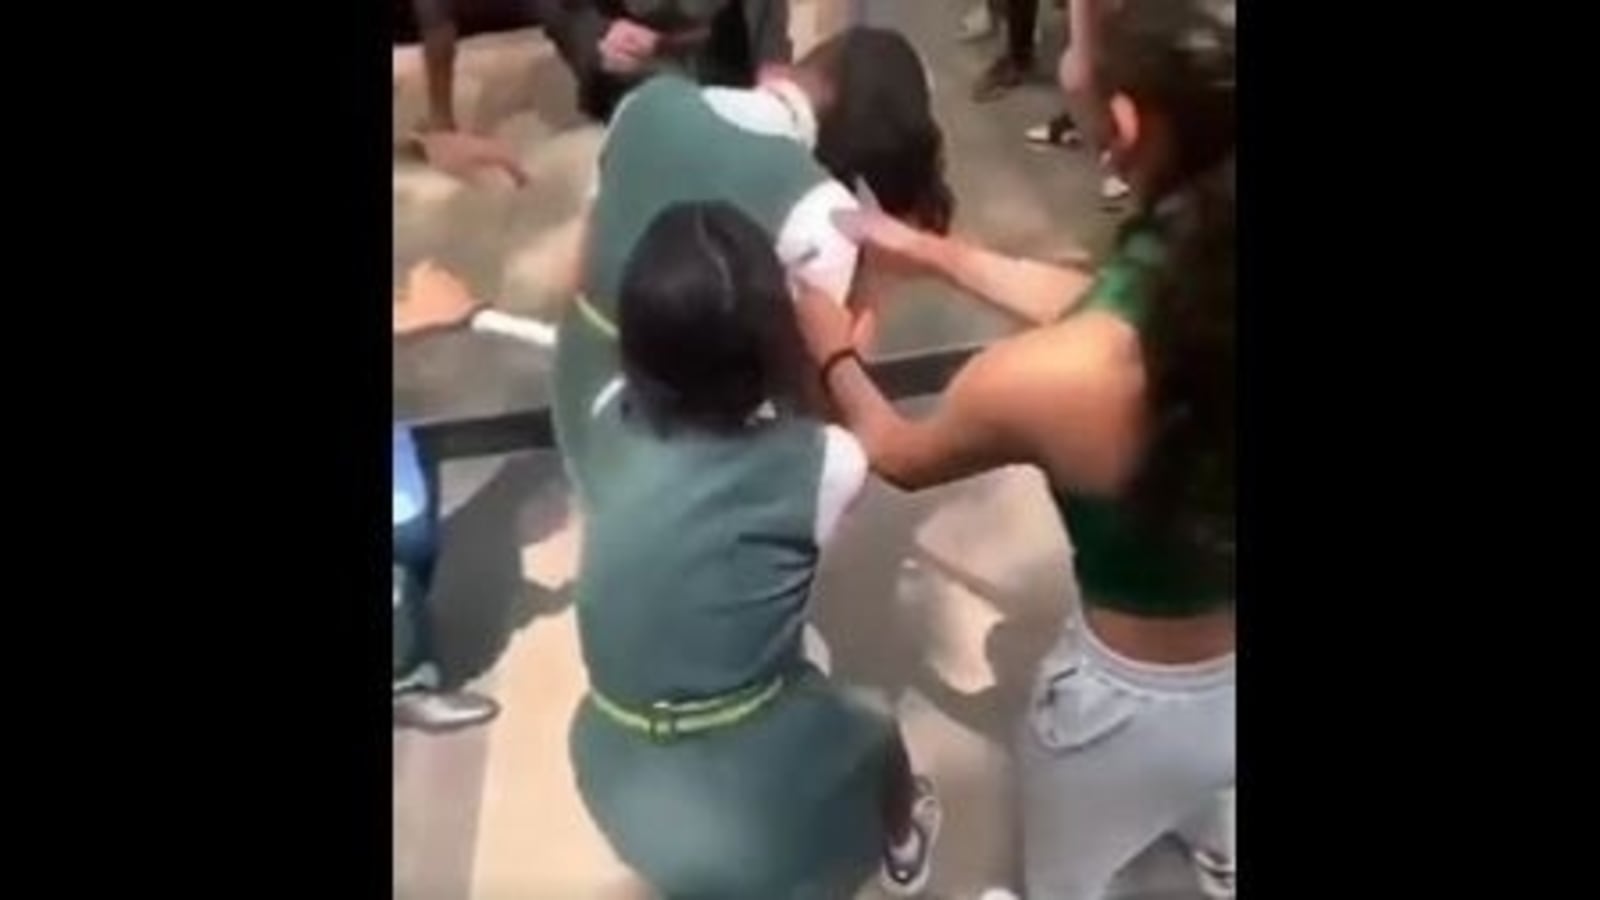 Delhi Girl School Xxx Vid - Video of Bengaluru girls fighting on street in school uniform emerges |  Latest News India - Hindustan Times